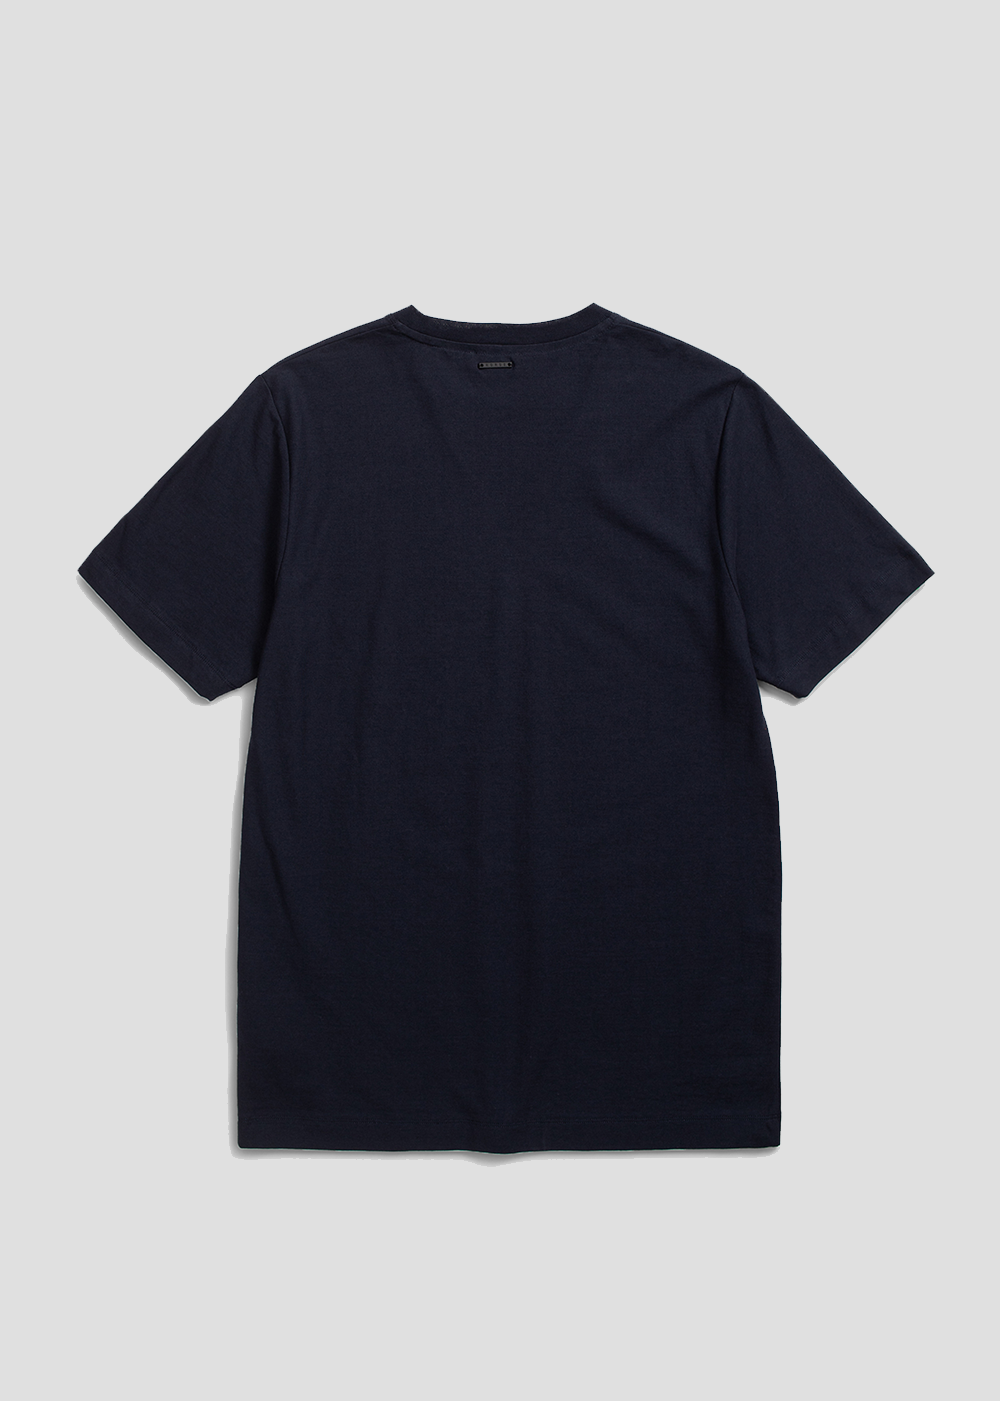 Jakob Cotton Crepe T-Shirt - Dark Navy - Norse Projects Canada - Danali